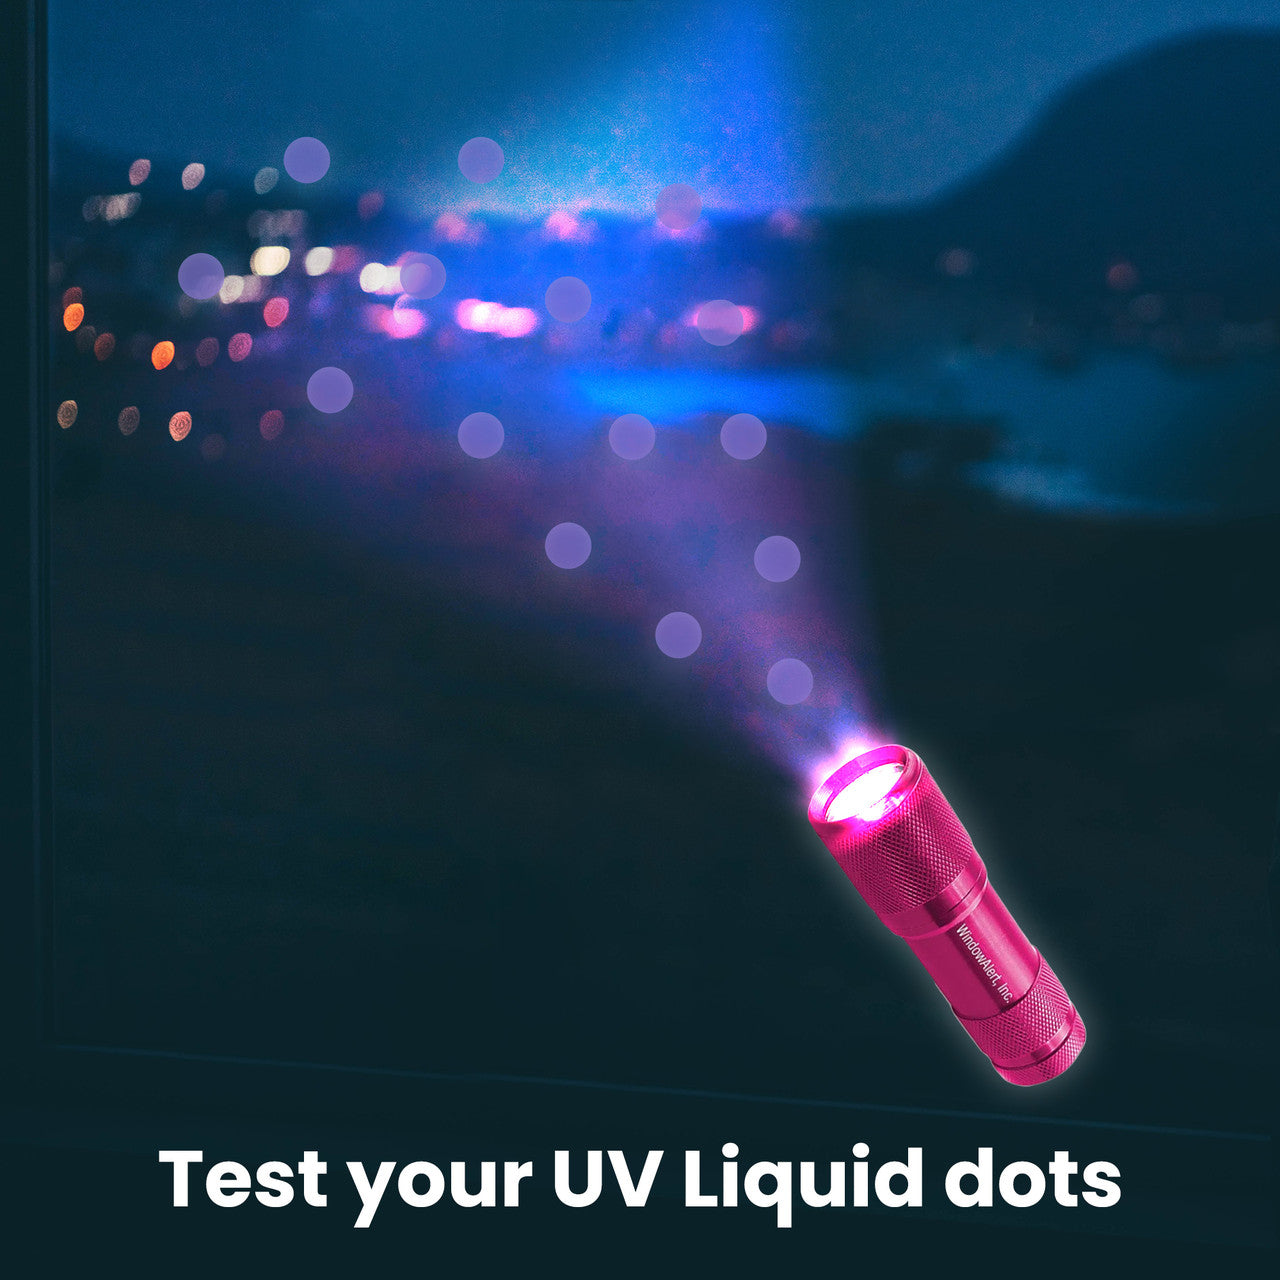 UV Tester flashlight to showcase UV Liquid dots on window.